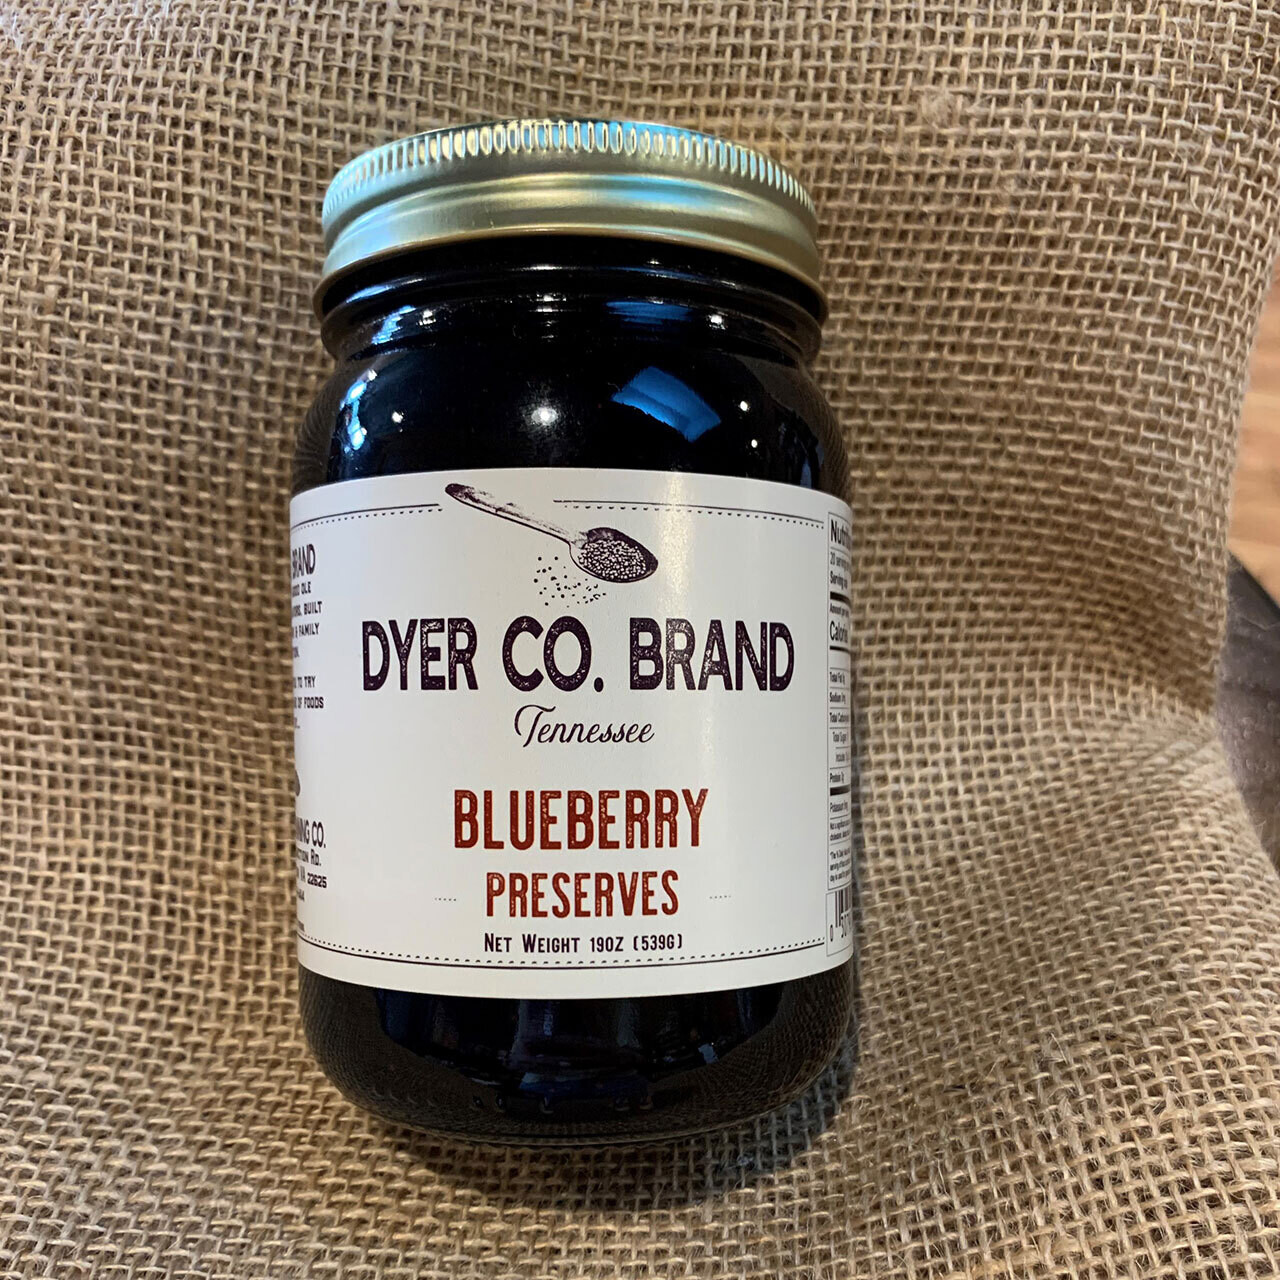 Dyer Co Brand Blueberry Preserves 19oz